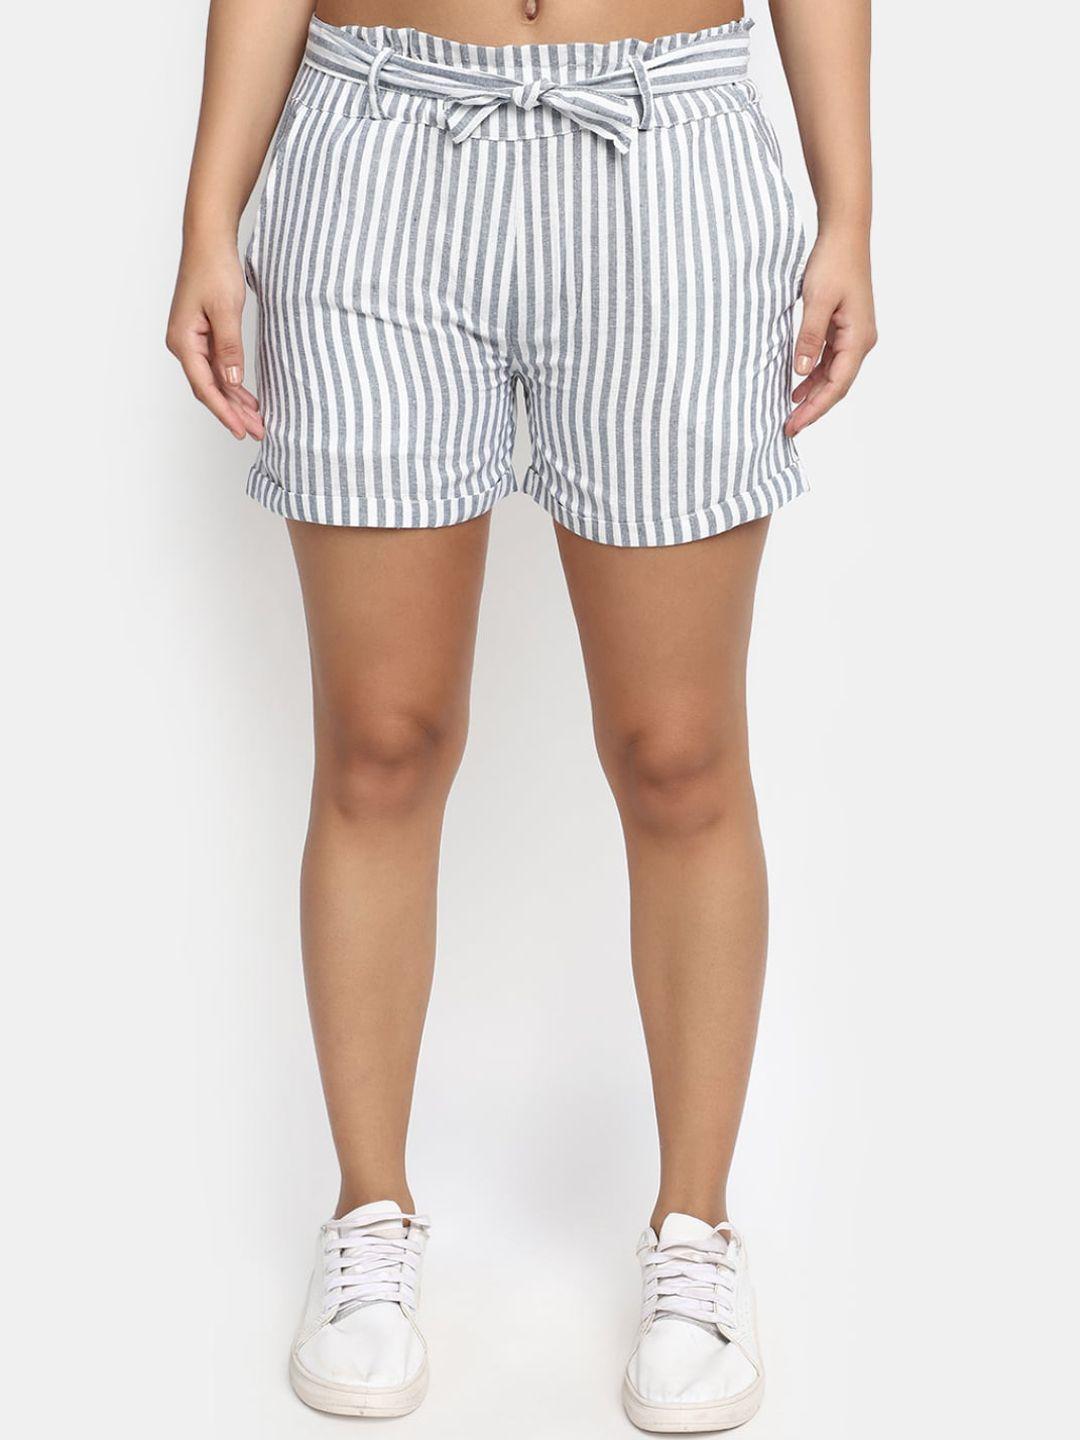 v-mart women mid-rise striped cotton shorts